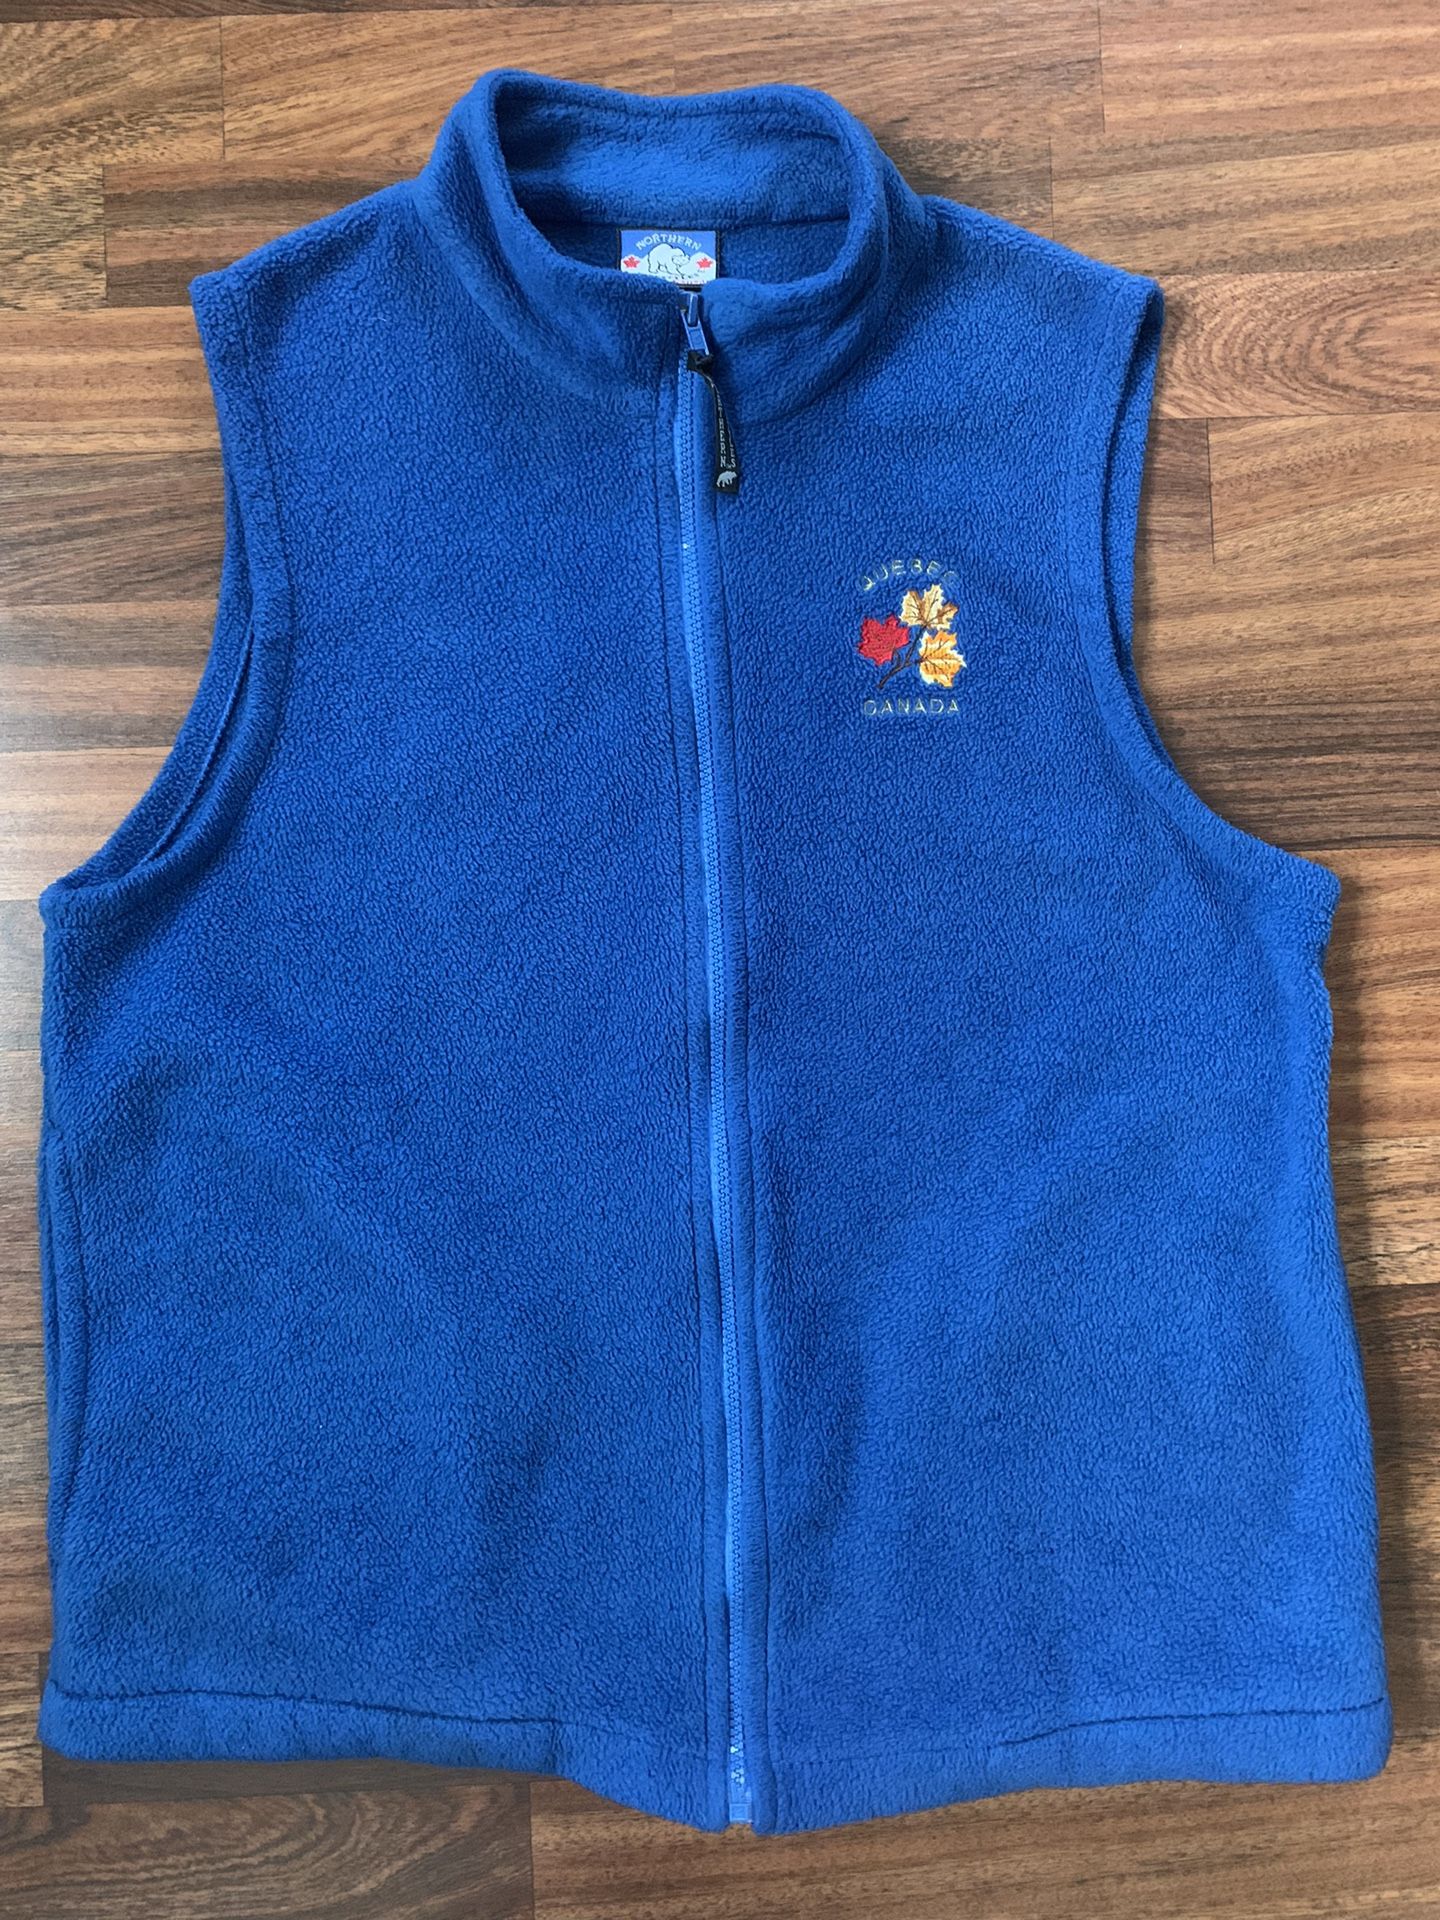 Northern Lifestyles Blue Fleece Full Zip Vest Size L Quebec Canada Leaf Logo